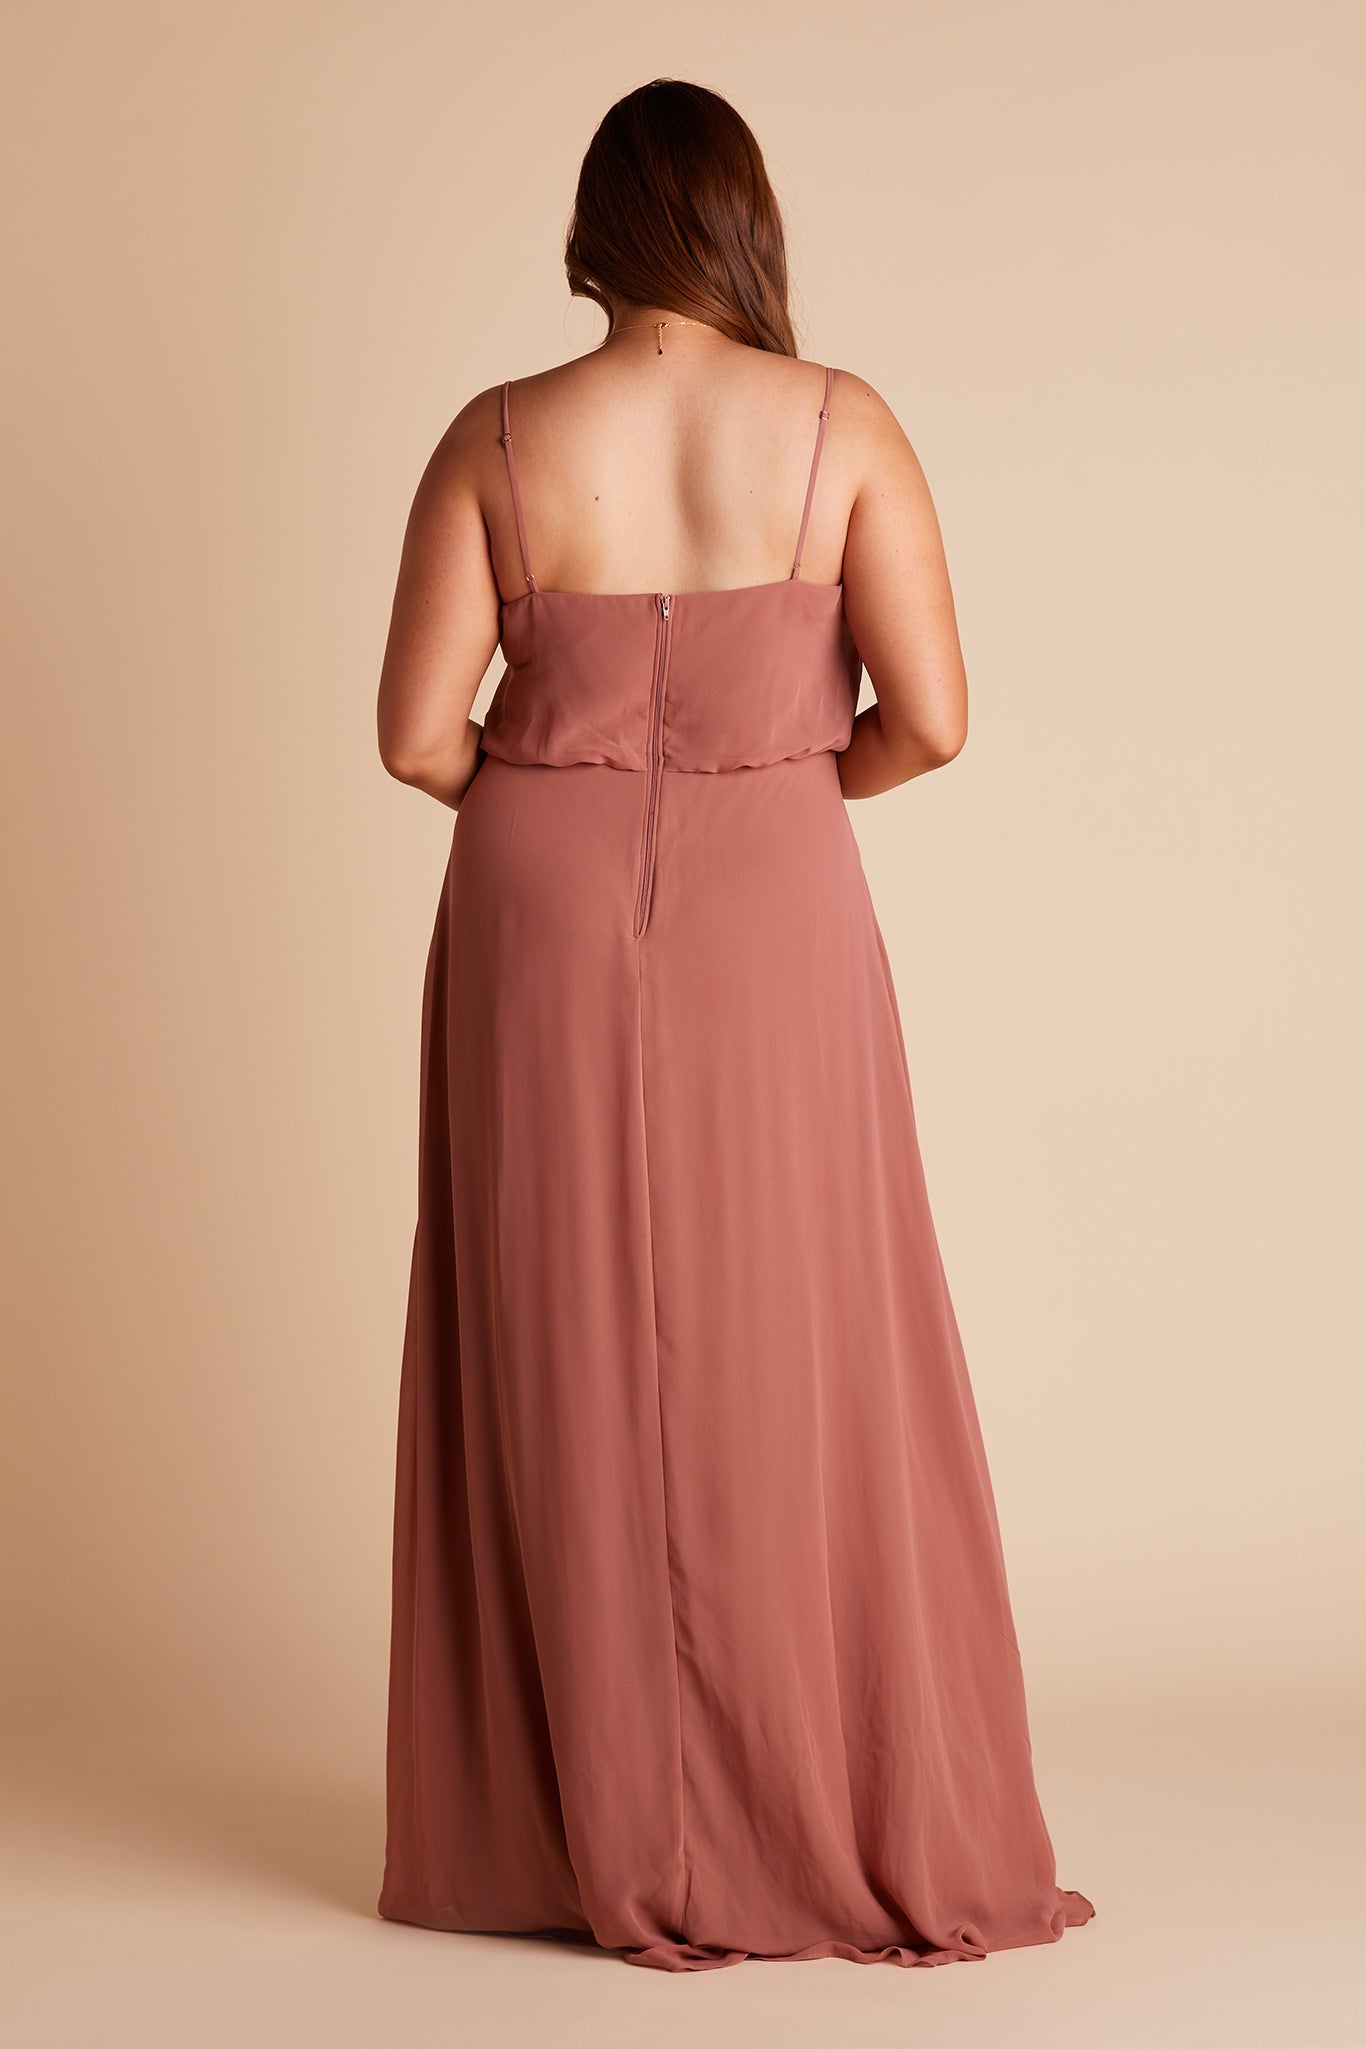 Gwennie plus size bridesmaid dress with slit in desert rose chiffon by Birdy Grey, back view